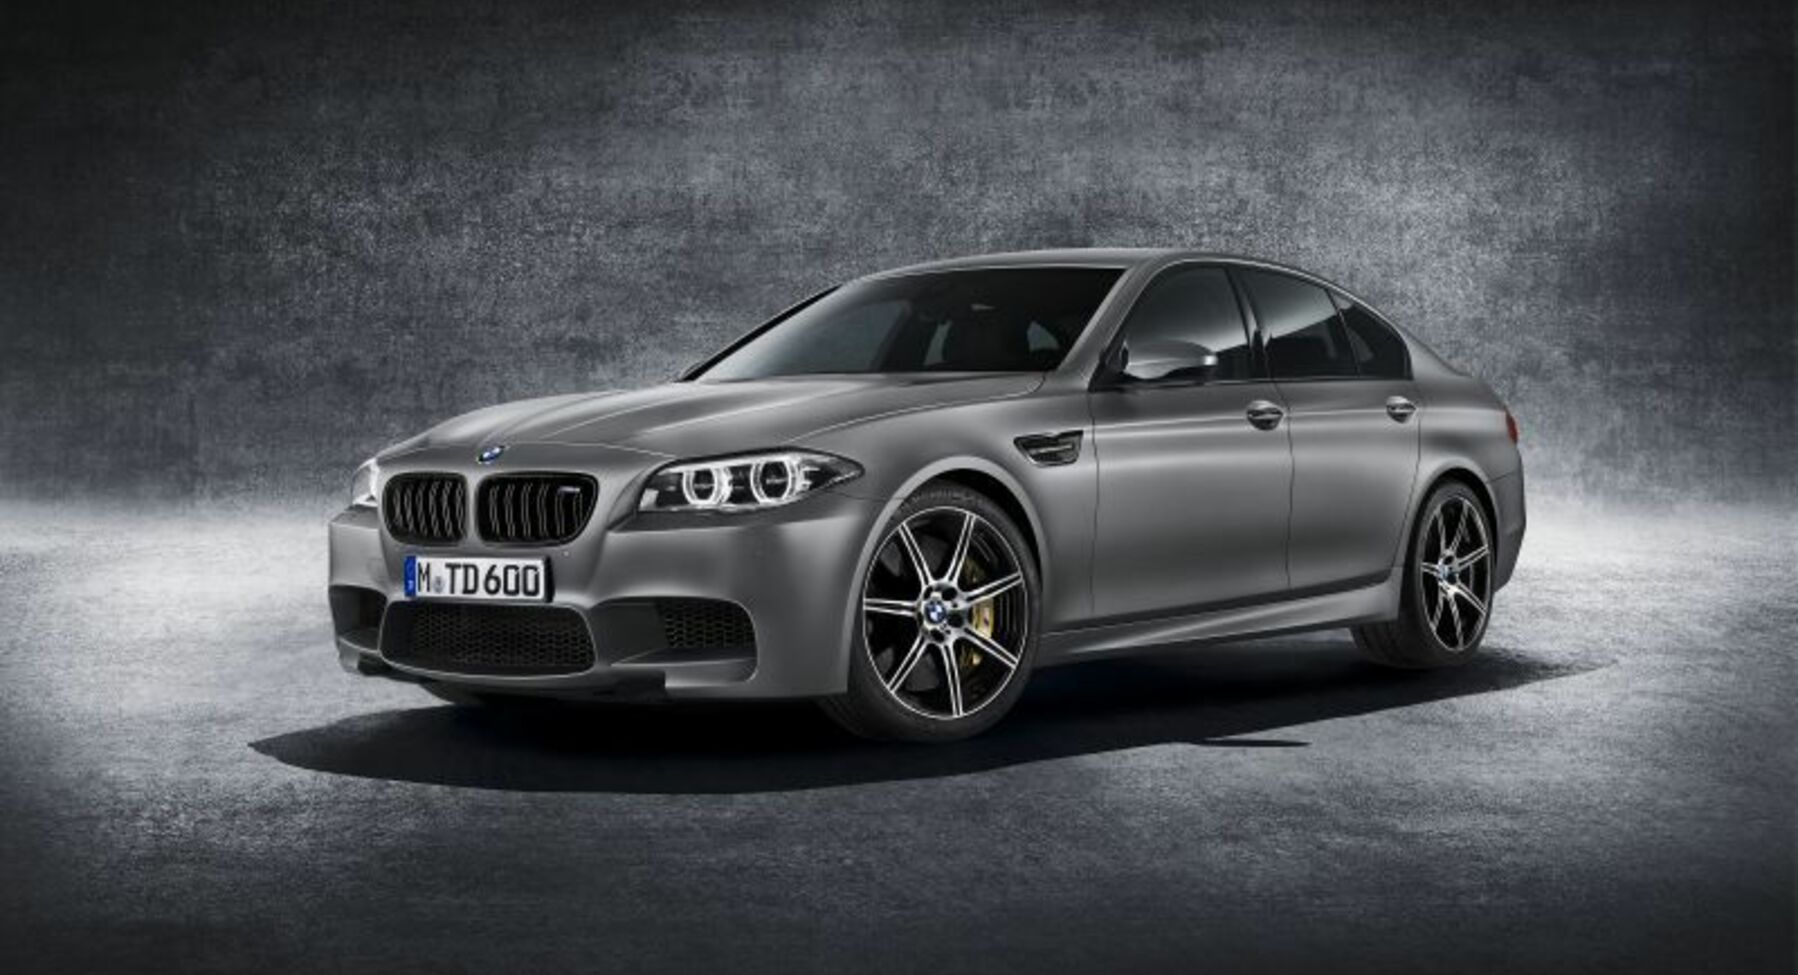 BMW M5 (F10M LCI, facelift 2014) 30 Jahre 4.4 V8 (600 Hp) DCT 2014, 2015, 2016 